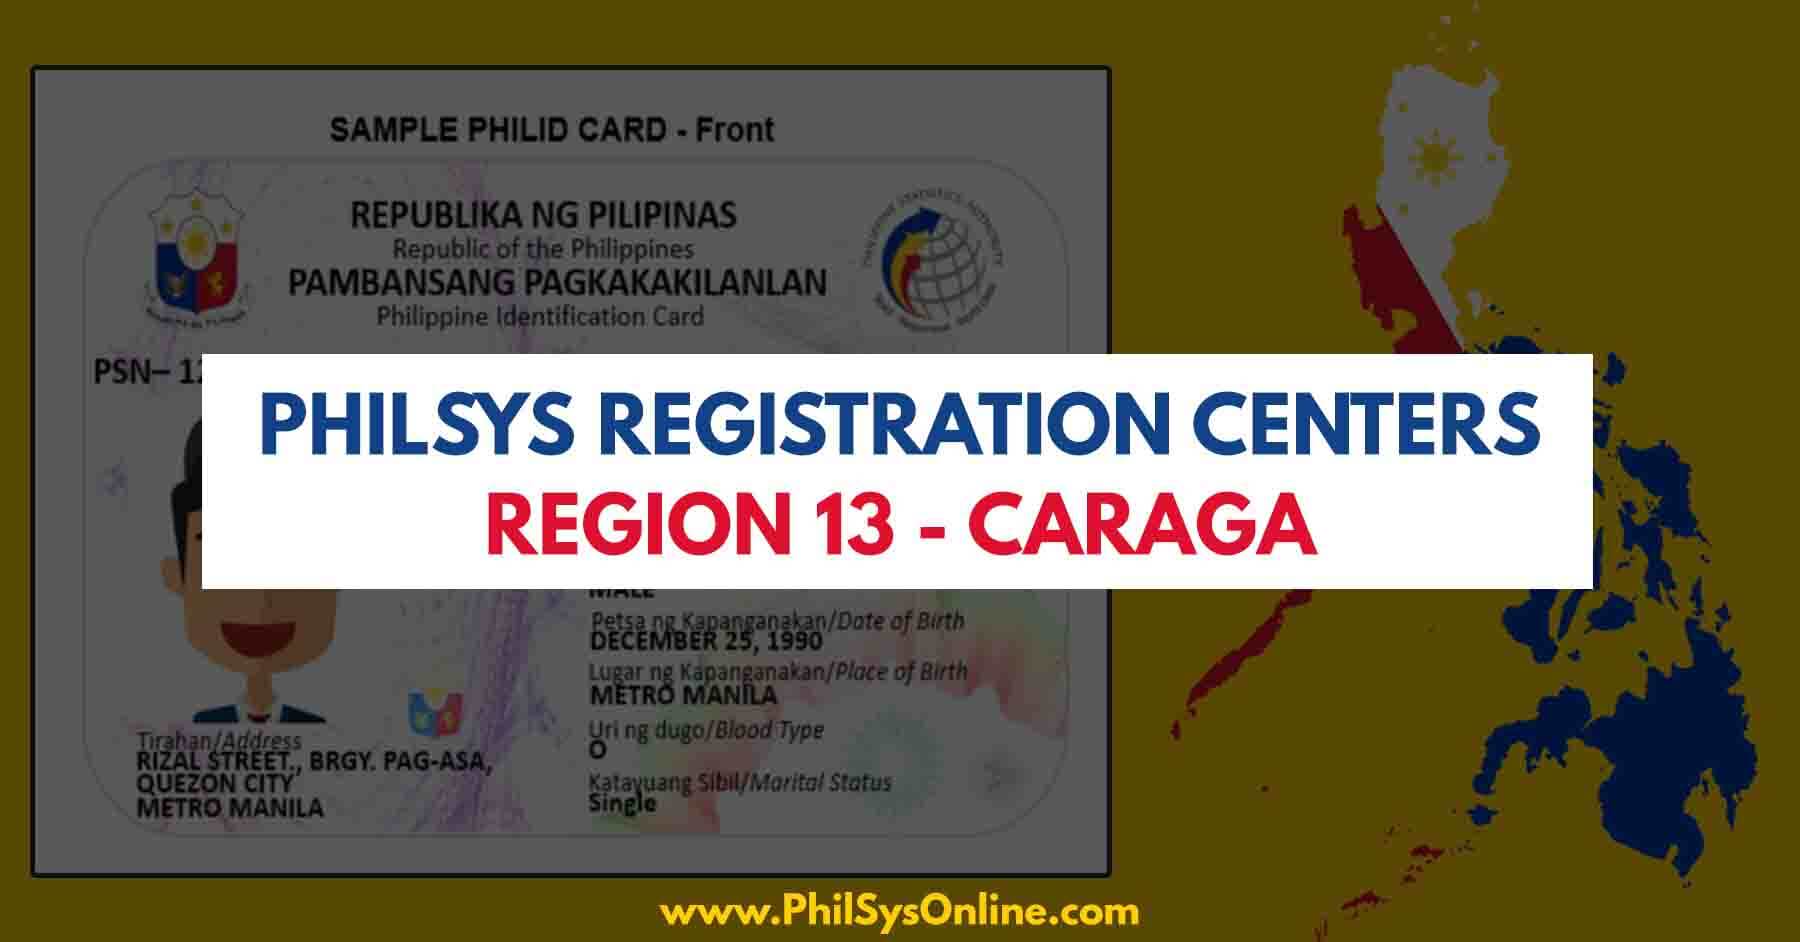 philsys registration center office in region 13 caraga philippines